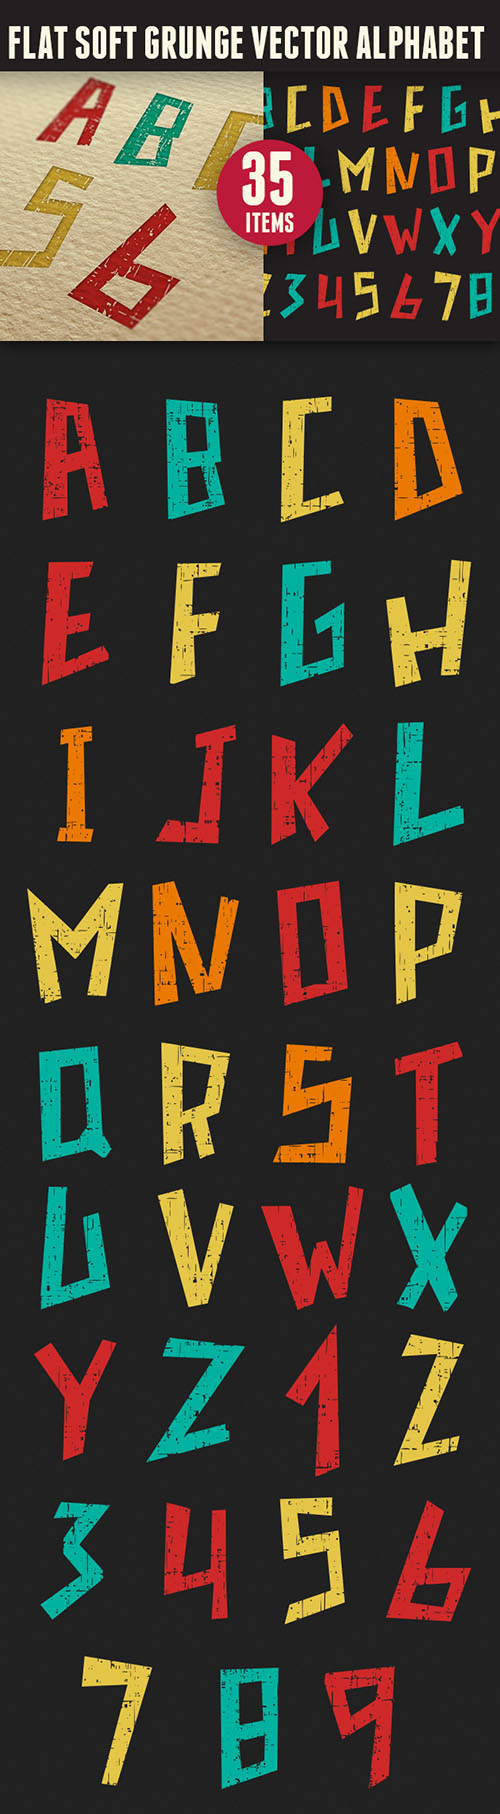 Flat Soft Grunge Vector Alphabet Illustration